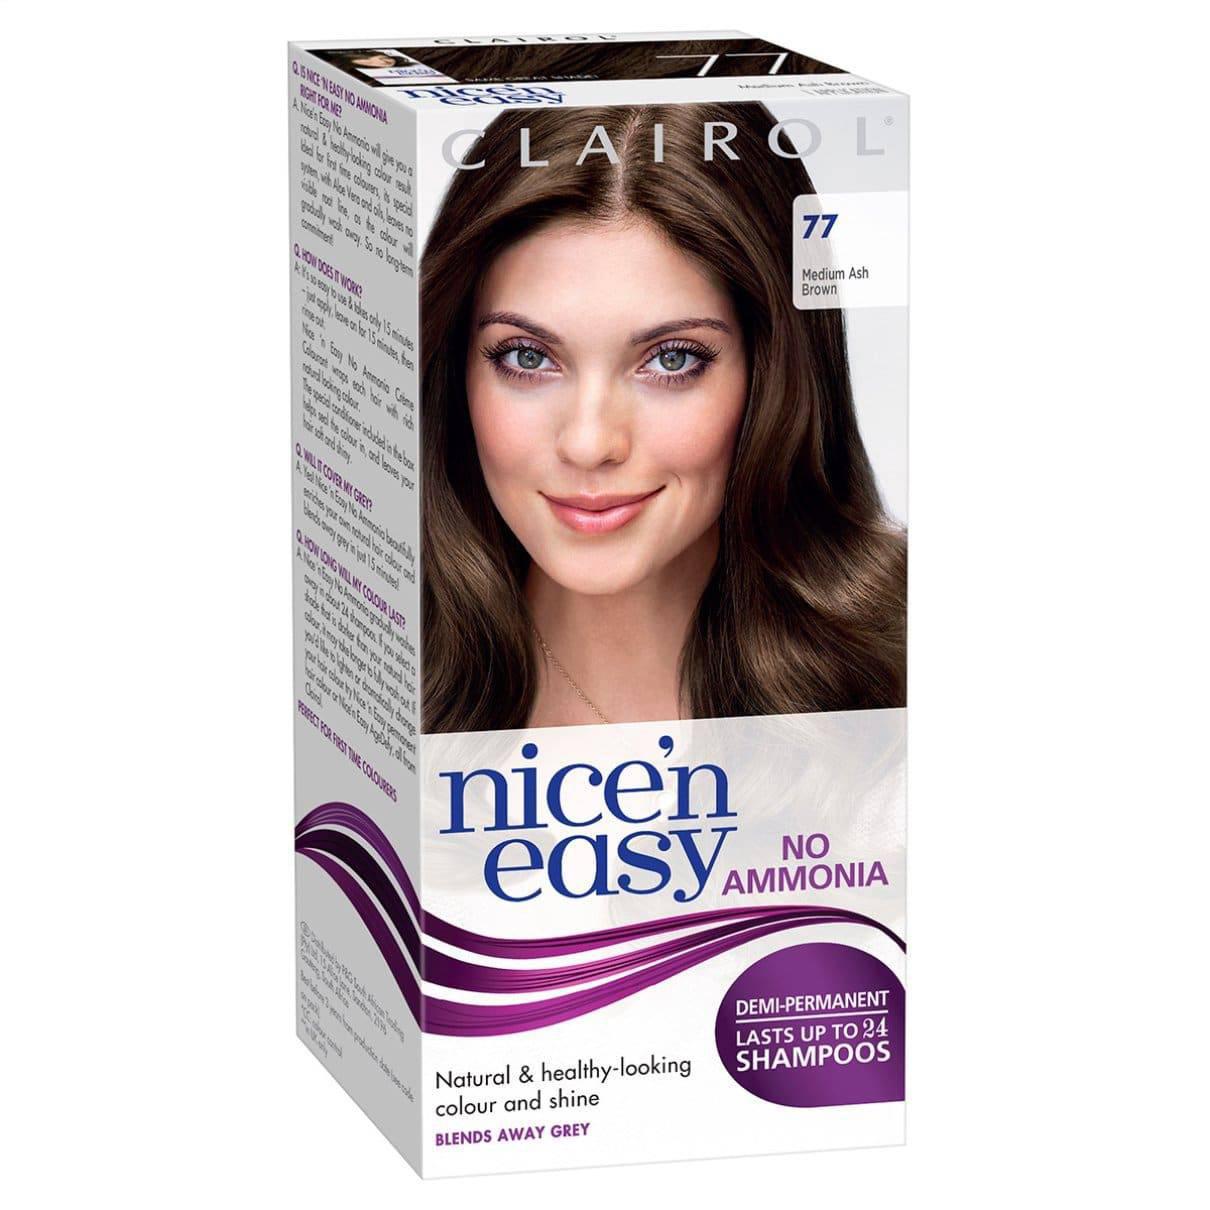 Clairol Nice N Easy No Ammonia Semi-Permanent Hair Dye - 77 Medium Ash Brown - Healthxpress.ie